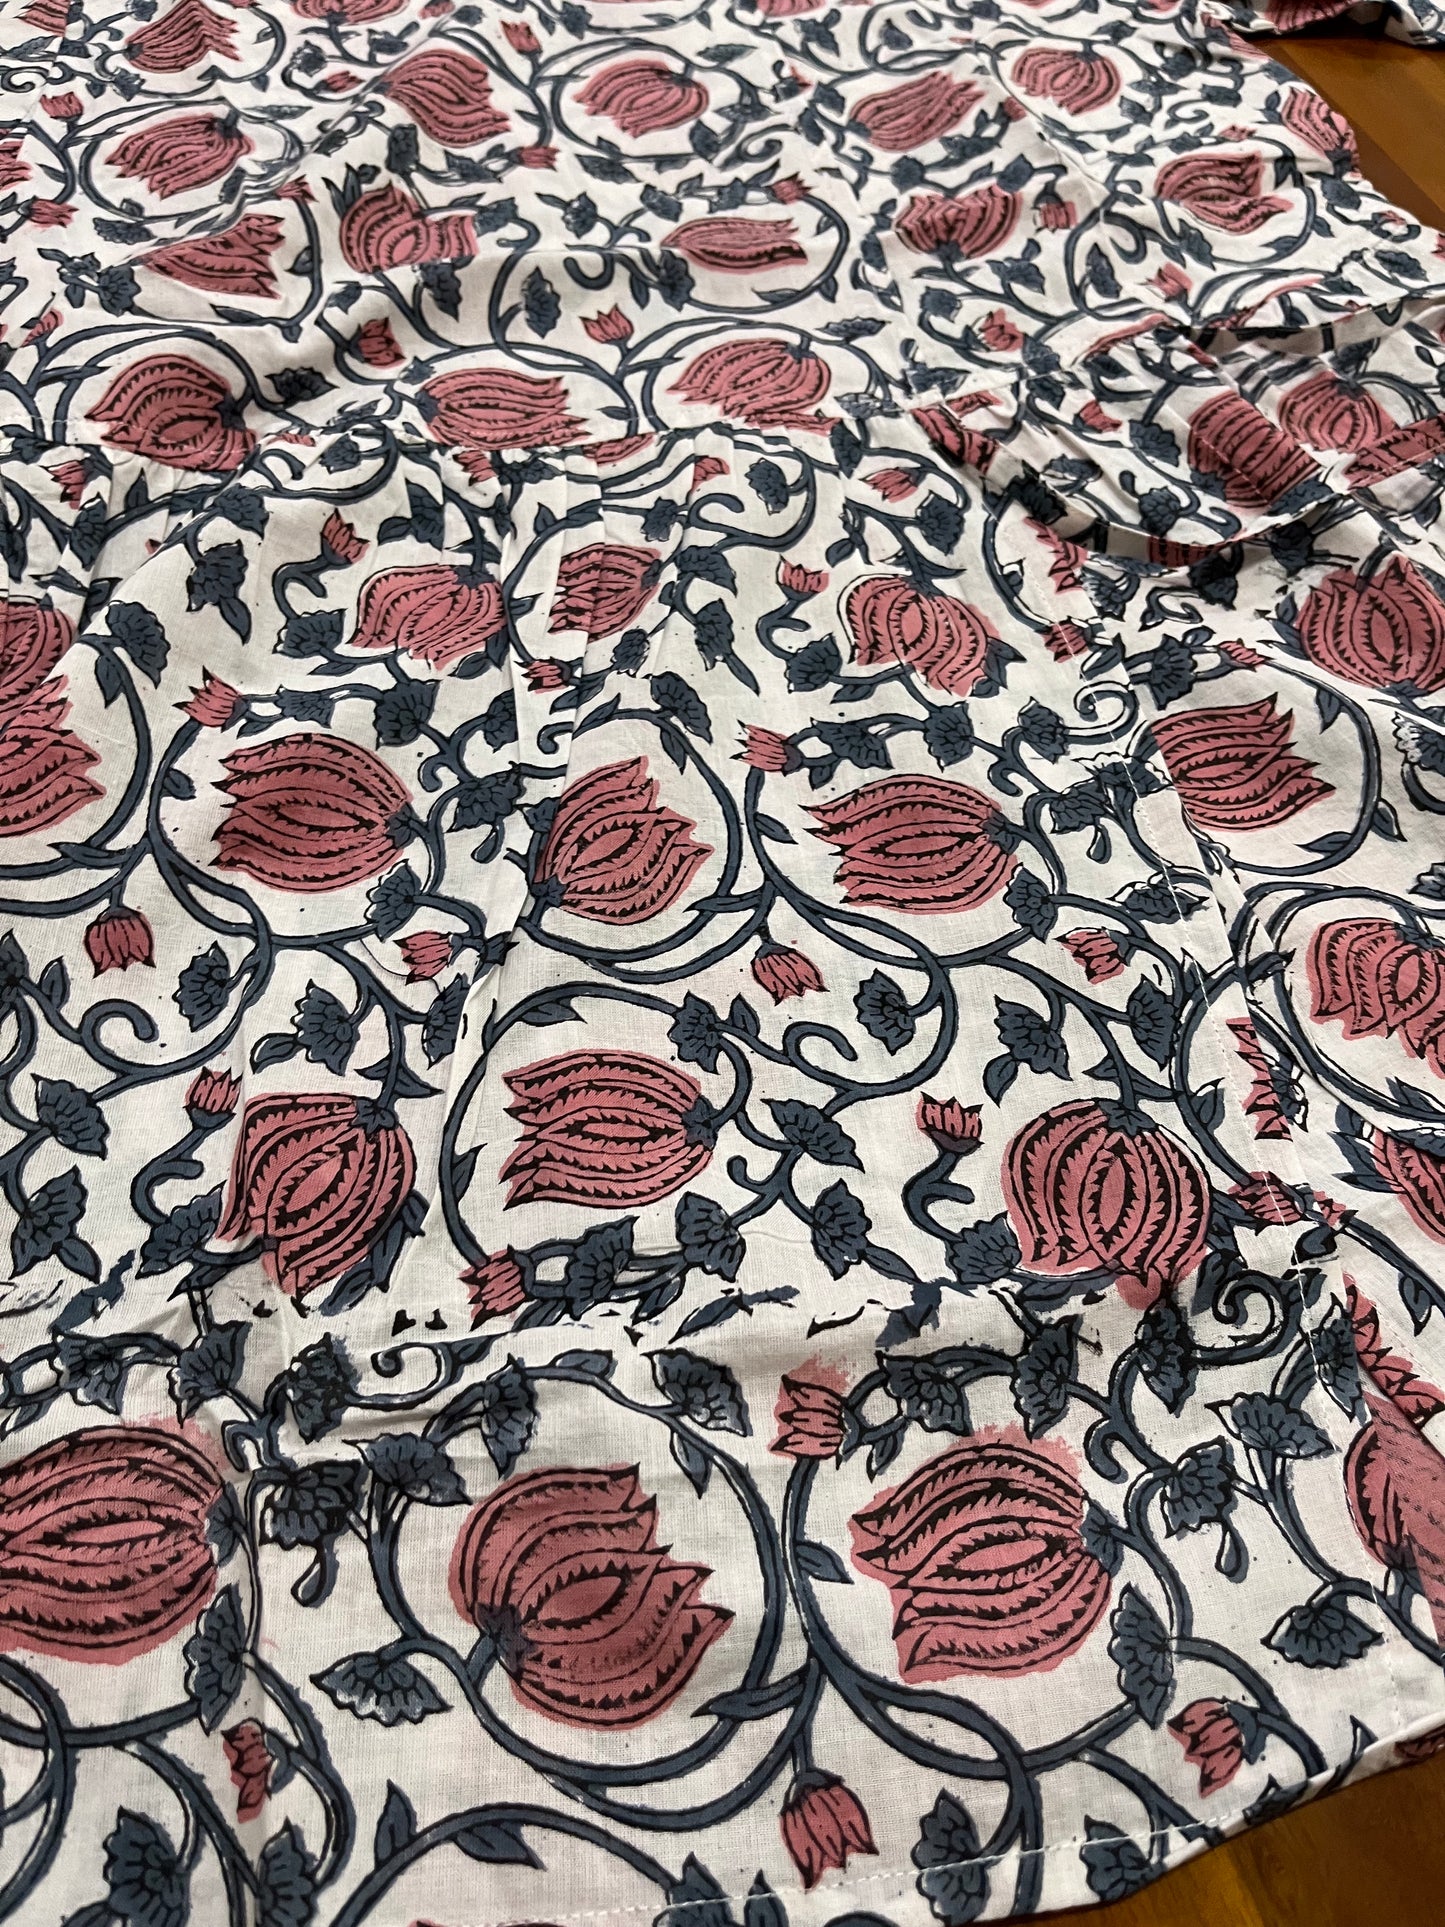 Southloom Jaipur Cotton Pink Floral Hand Block Printed White Top (Half Sleeves)